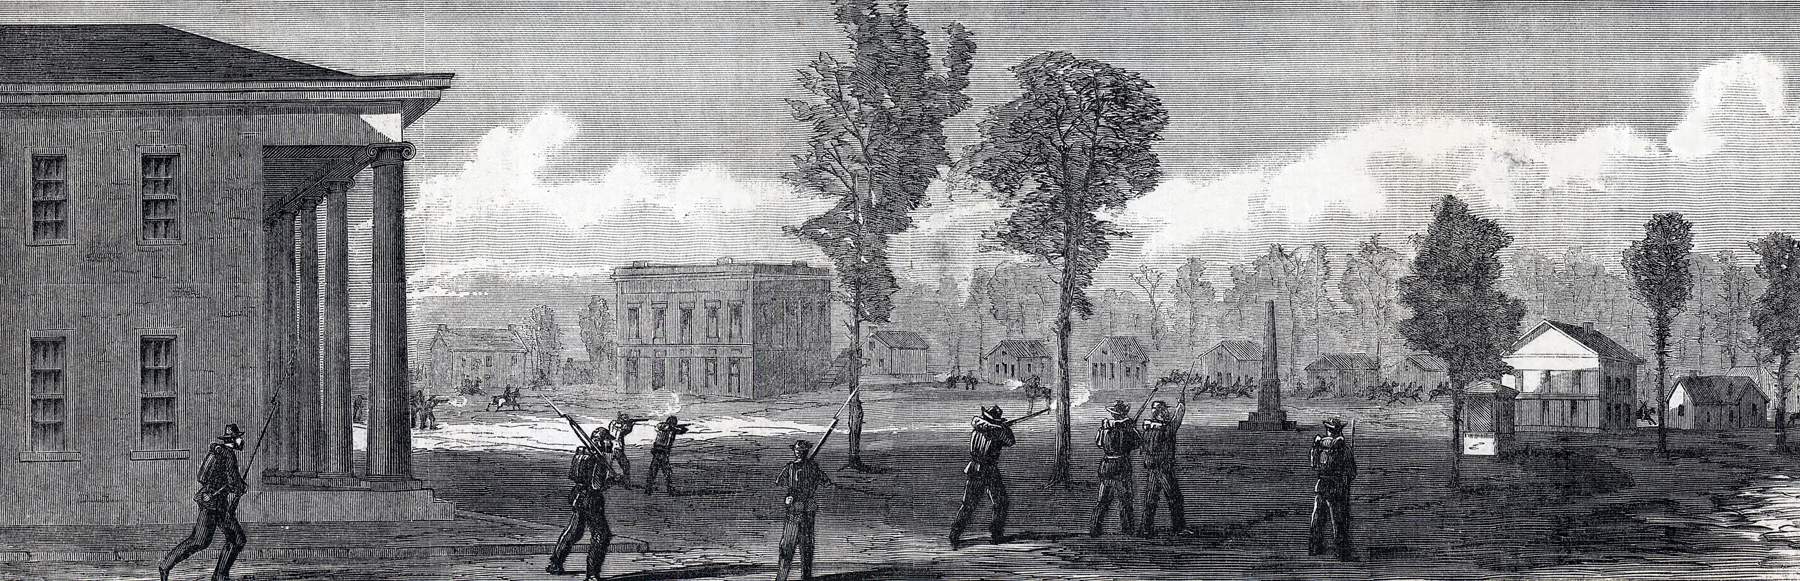 Skirmish at Sandersville, Georgia, November 25, 1864, artist's impression, zoomable image